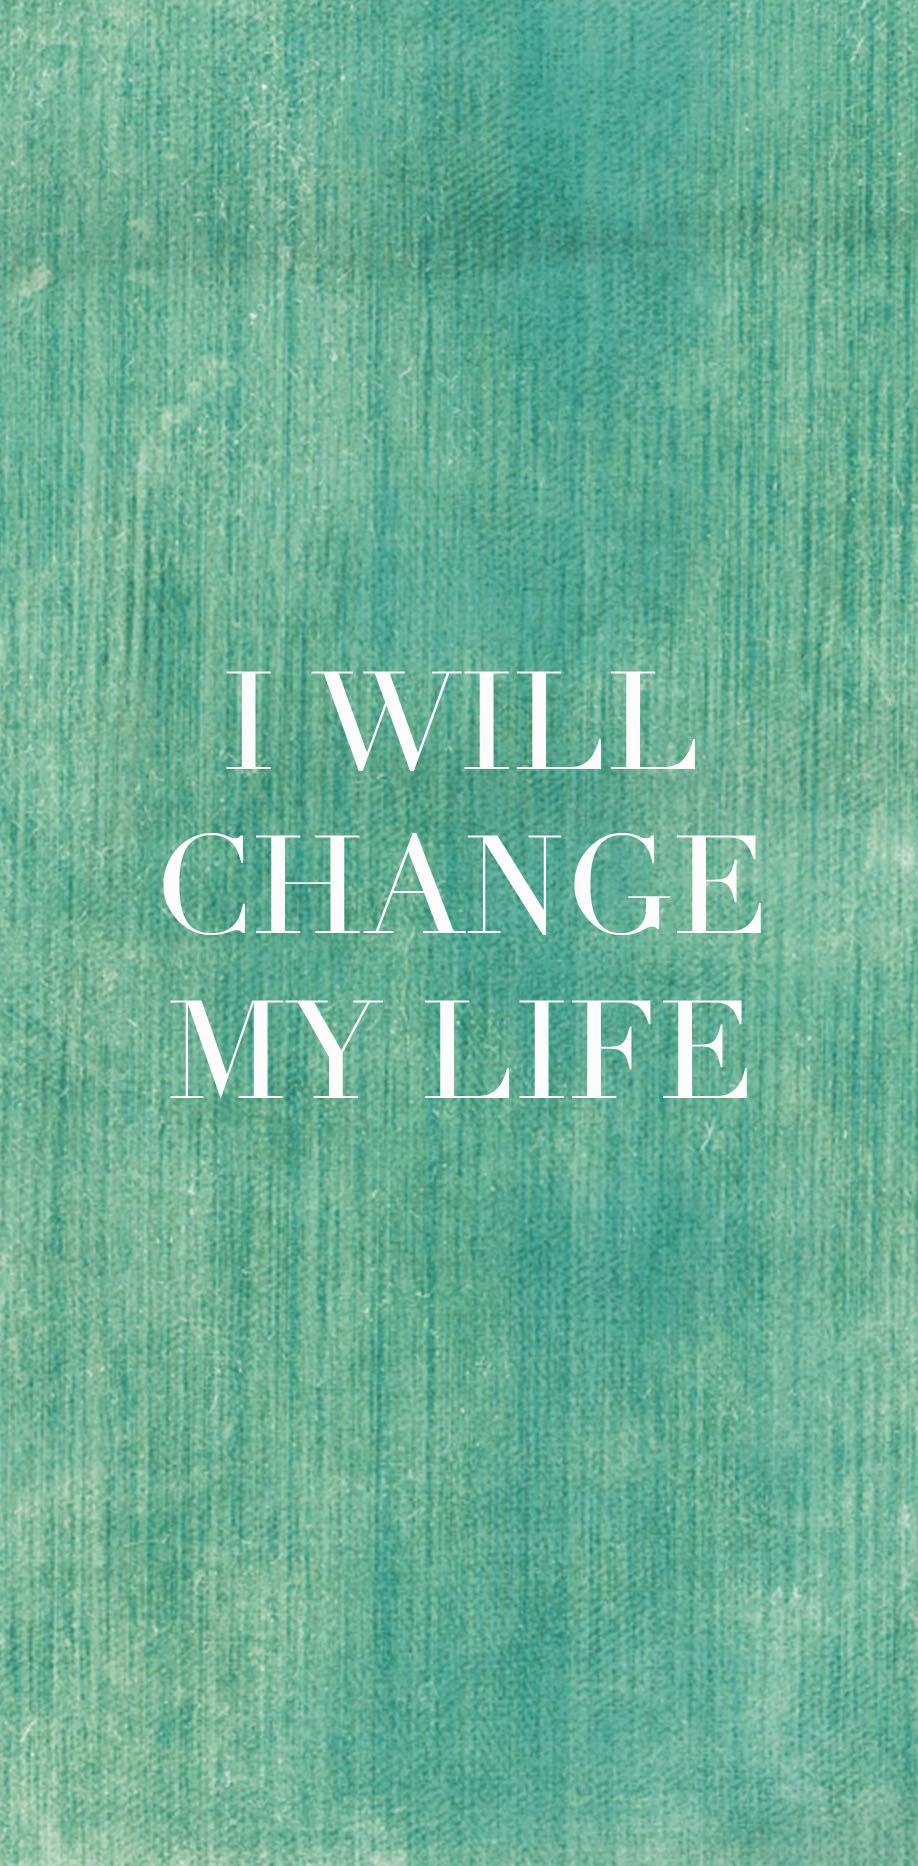 I will change my life